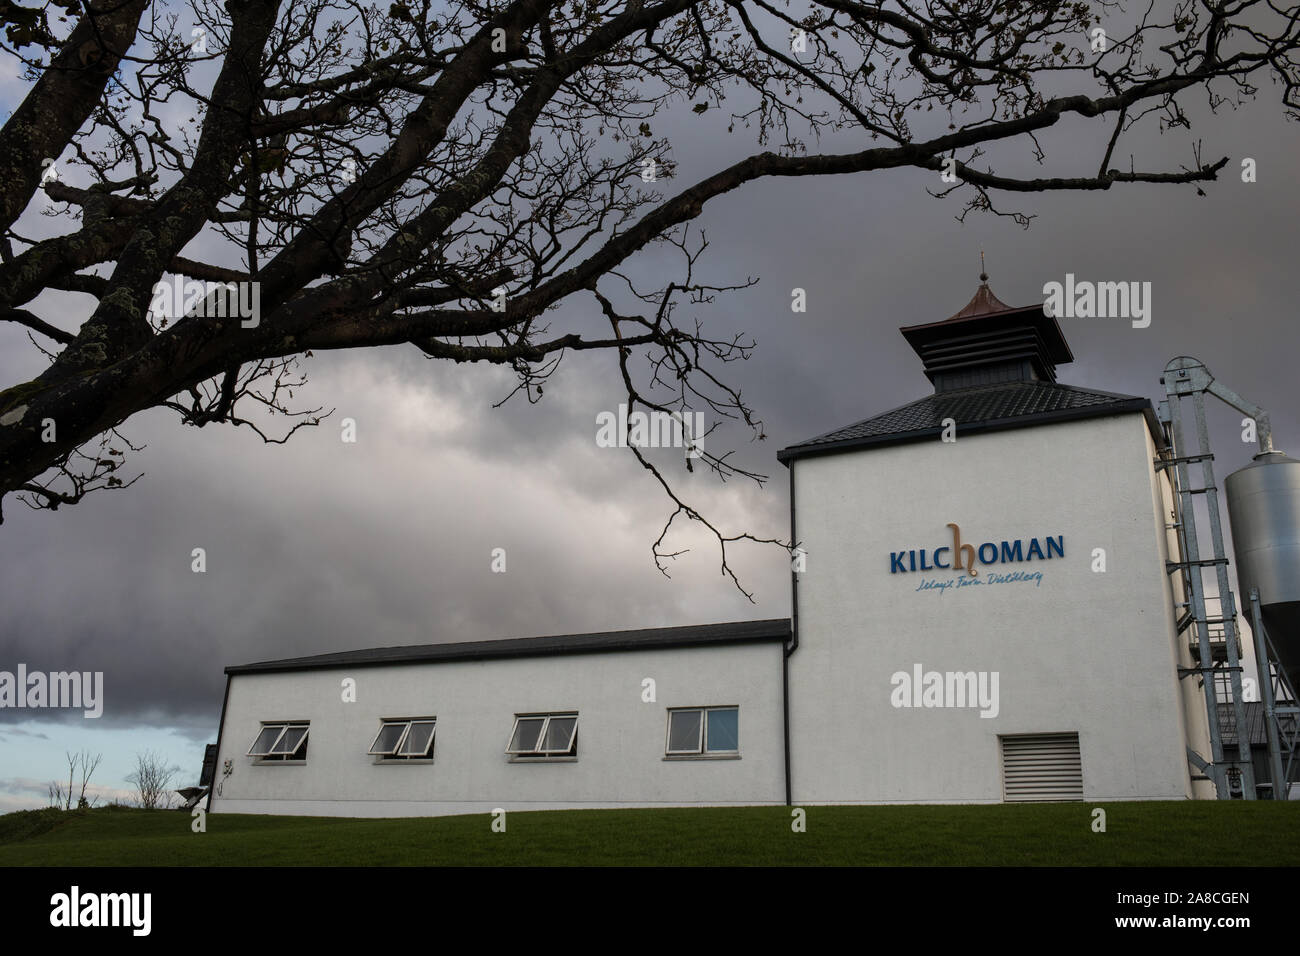 Kilchoman single malt whisky distillery markets itself as Islay's only farm distillery, on Islay, Scotland, 16 October 2019. Stock Photo